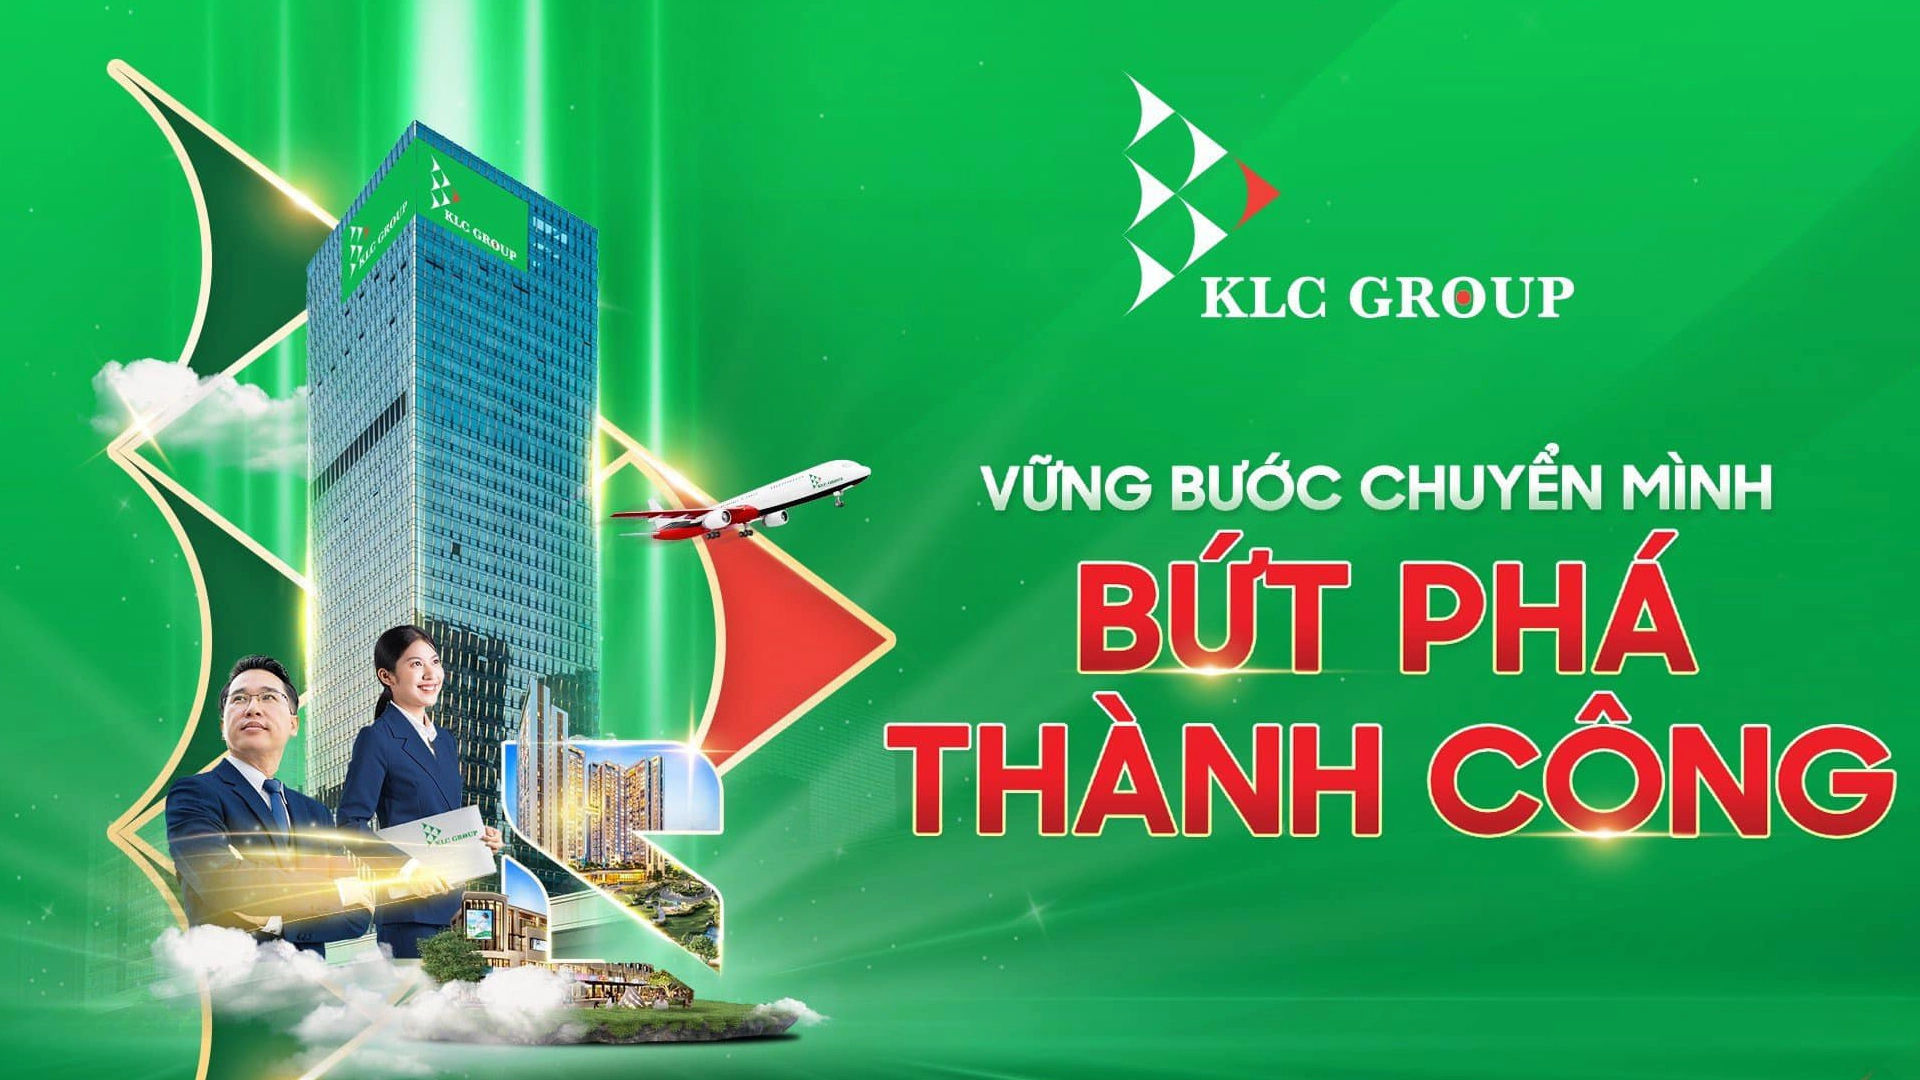 klc-group-vung-buoc-chuyen-minh-buc-pha-thanh-cong